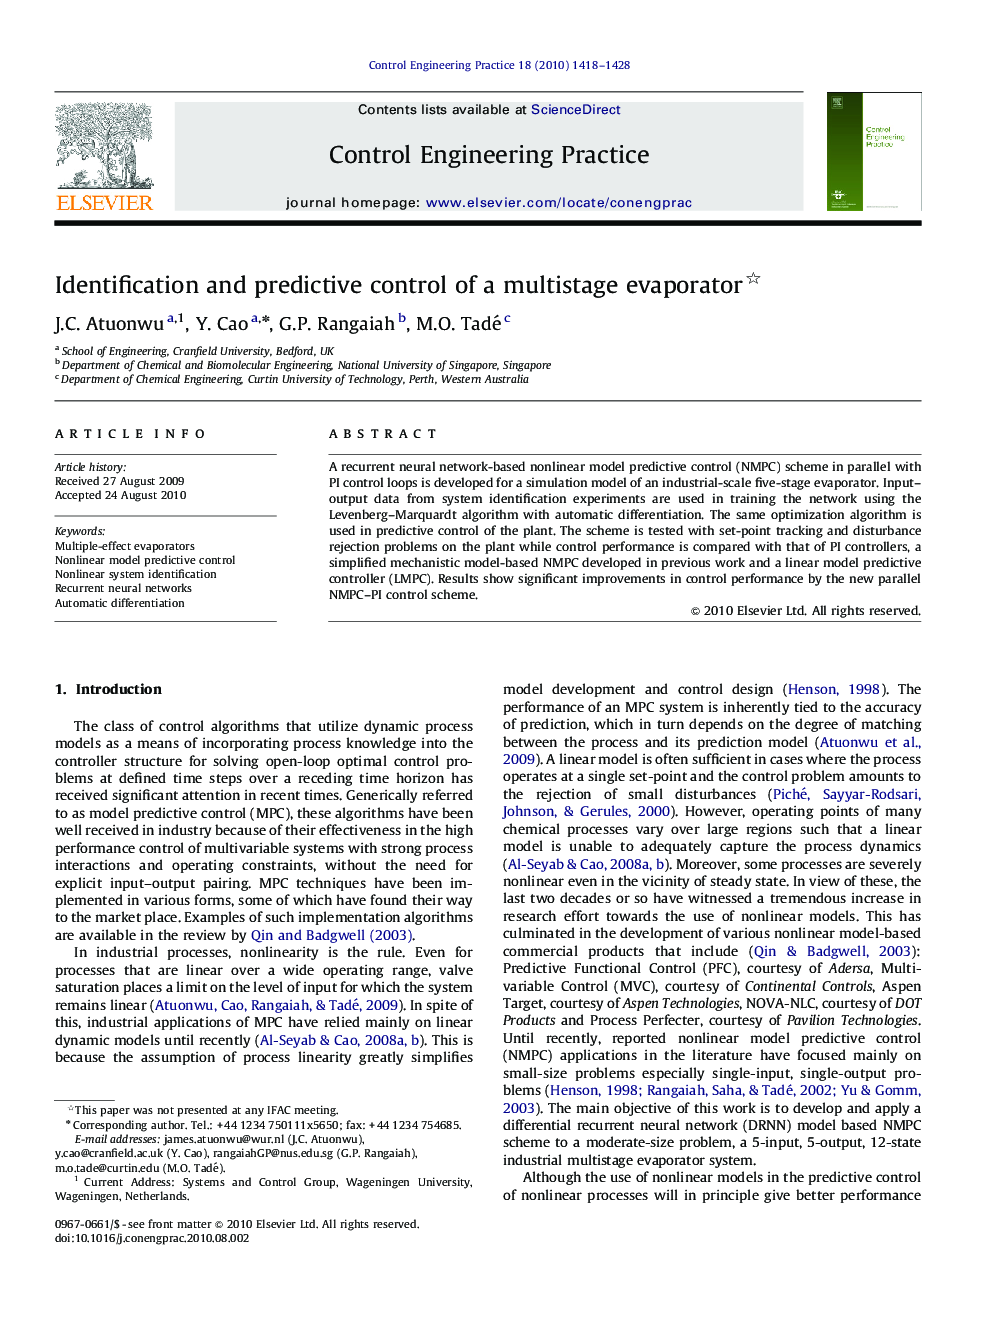 Identification and predictive control of a multistage evaporator 